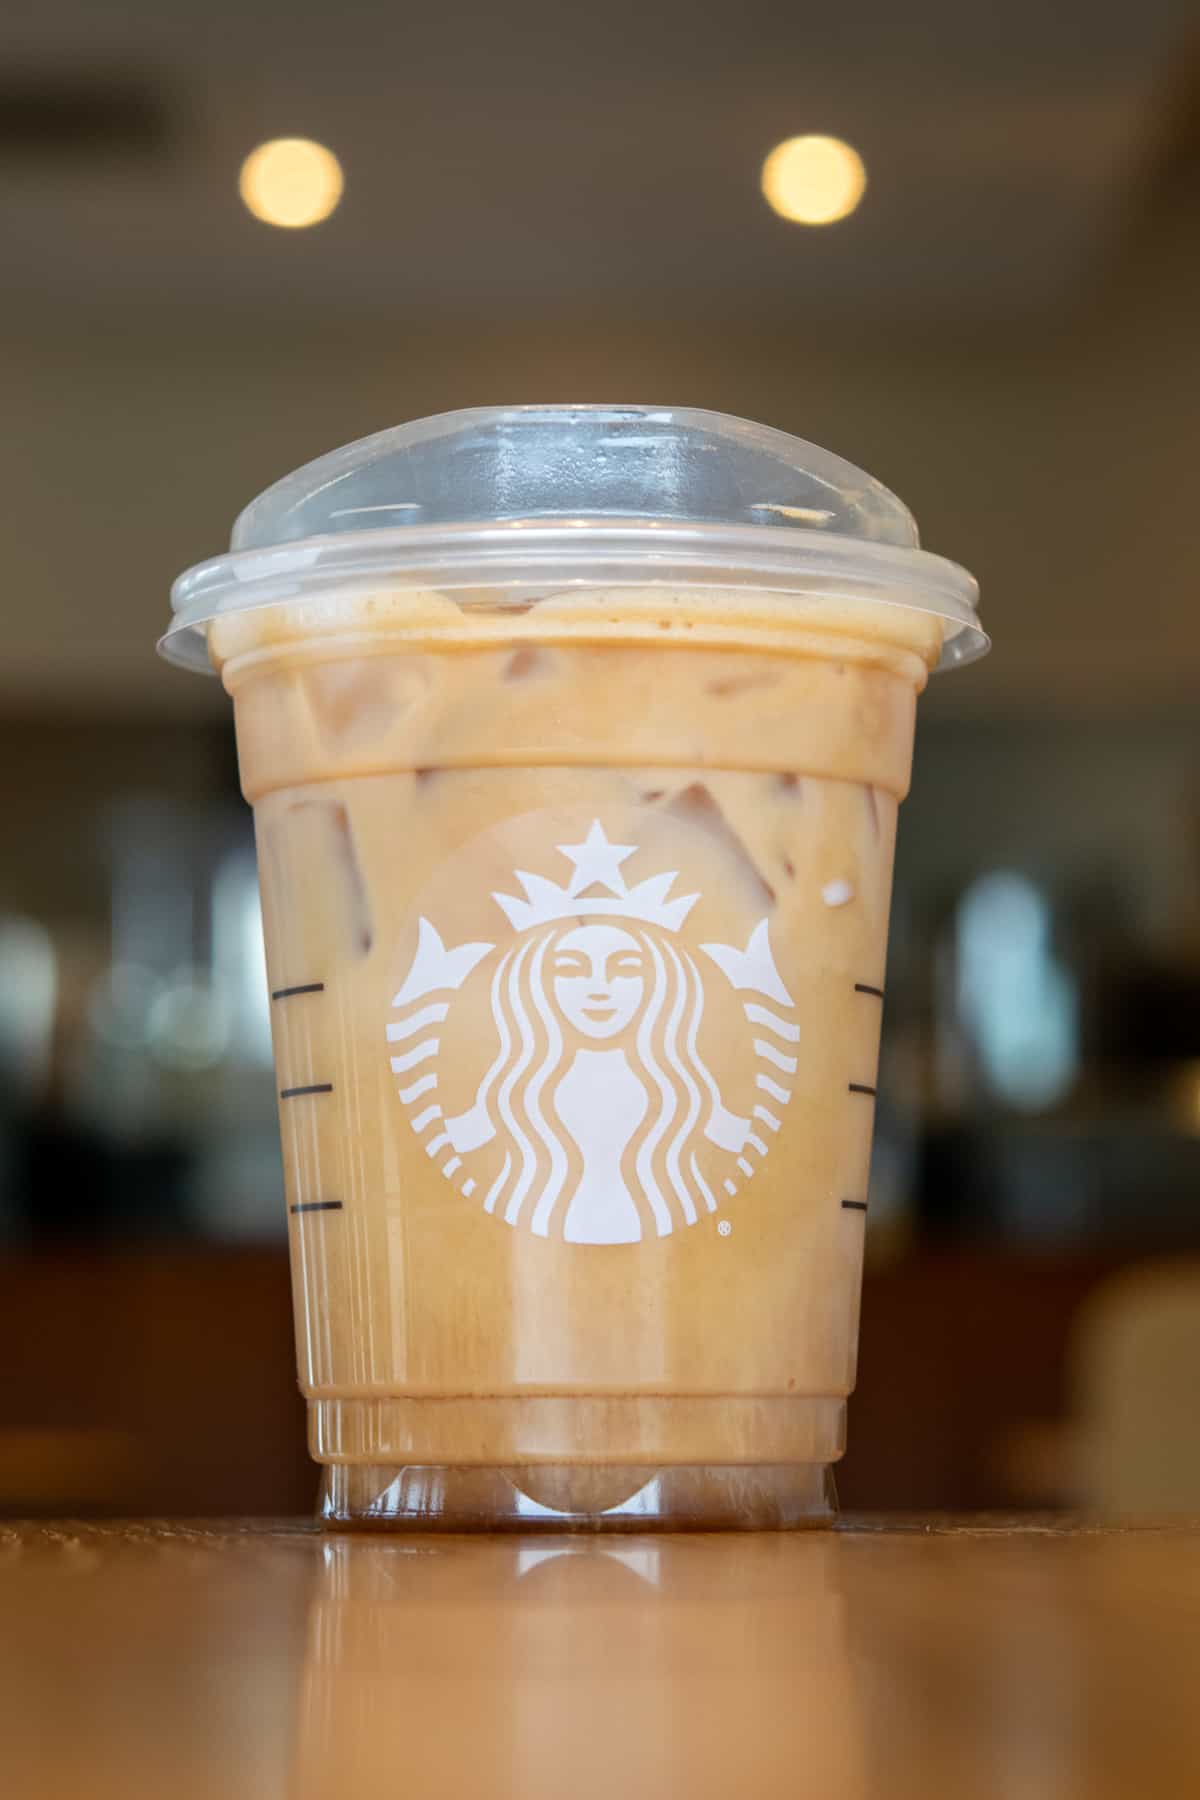 Starbucks Iced Shaken Espresso is one type of iced coffee drink at Starbucks.